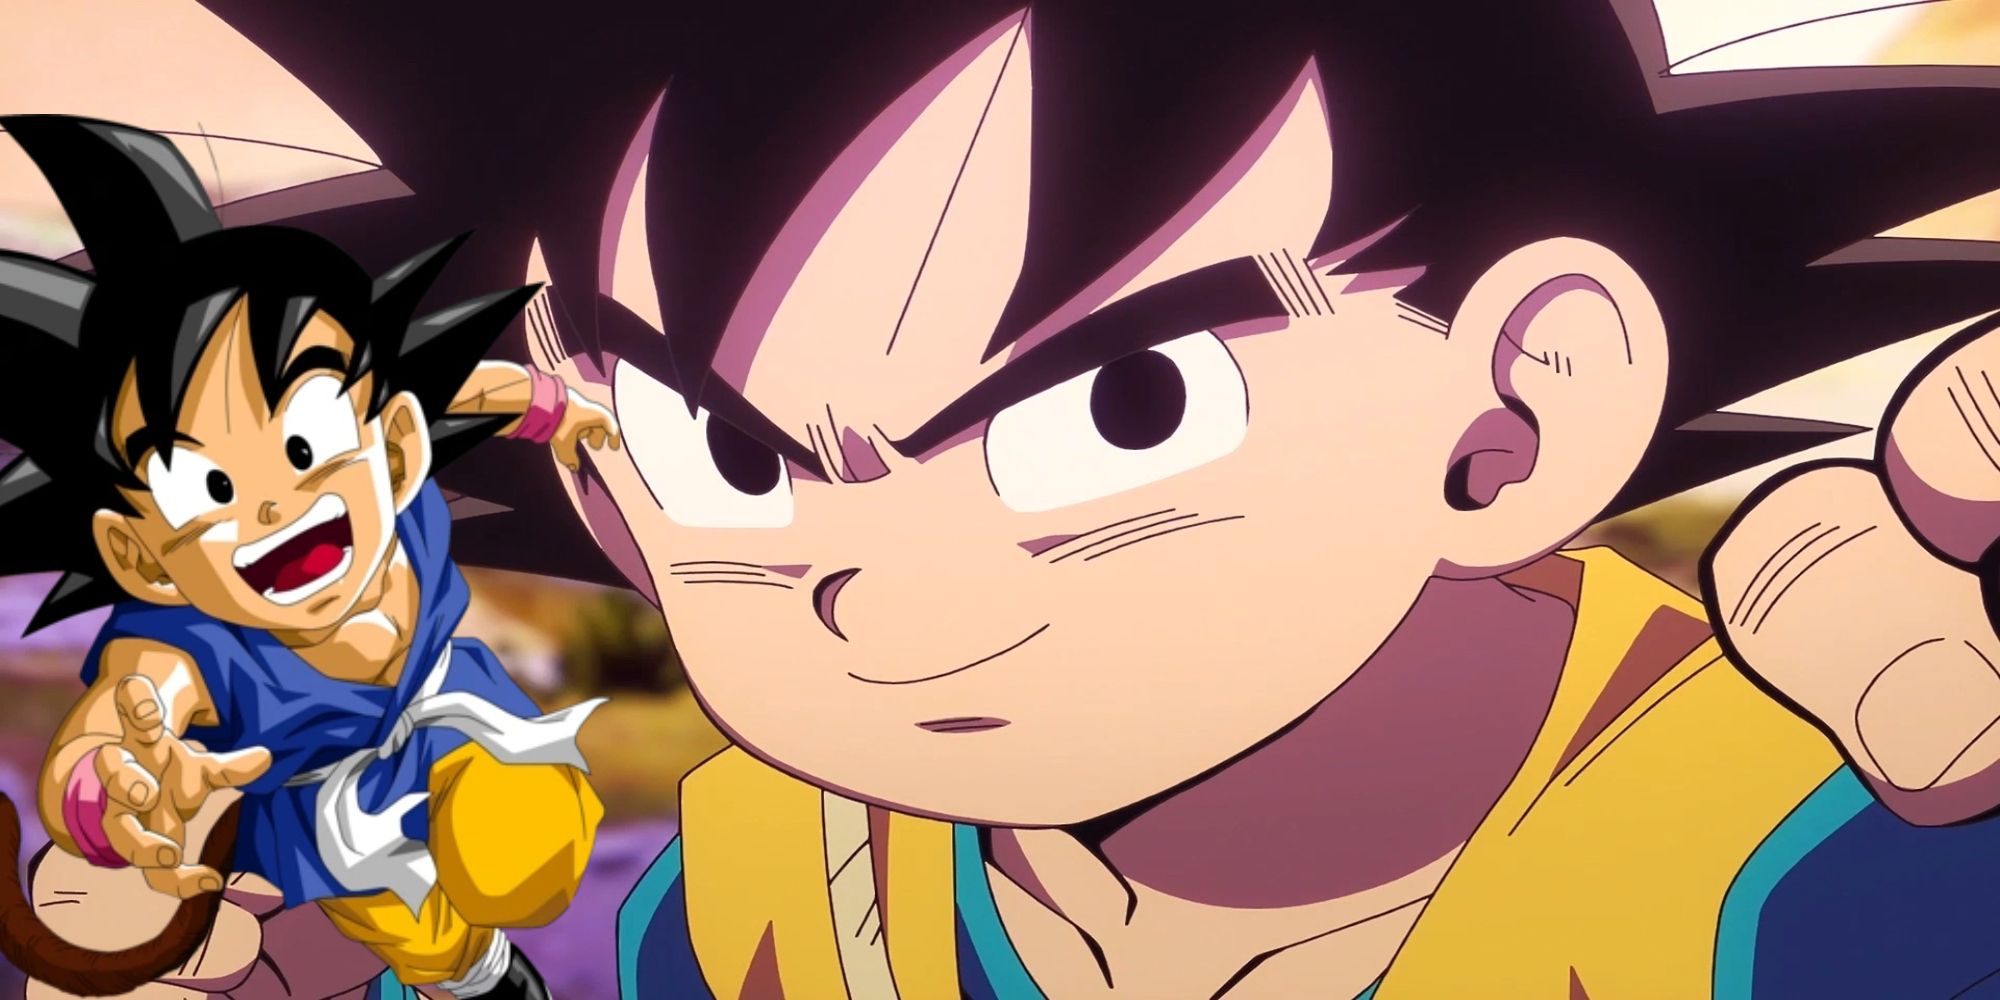 Goku in GT and Goku in DAIMA